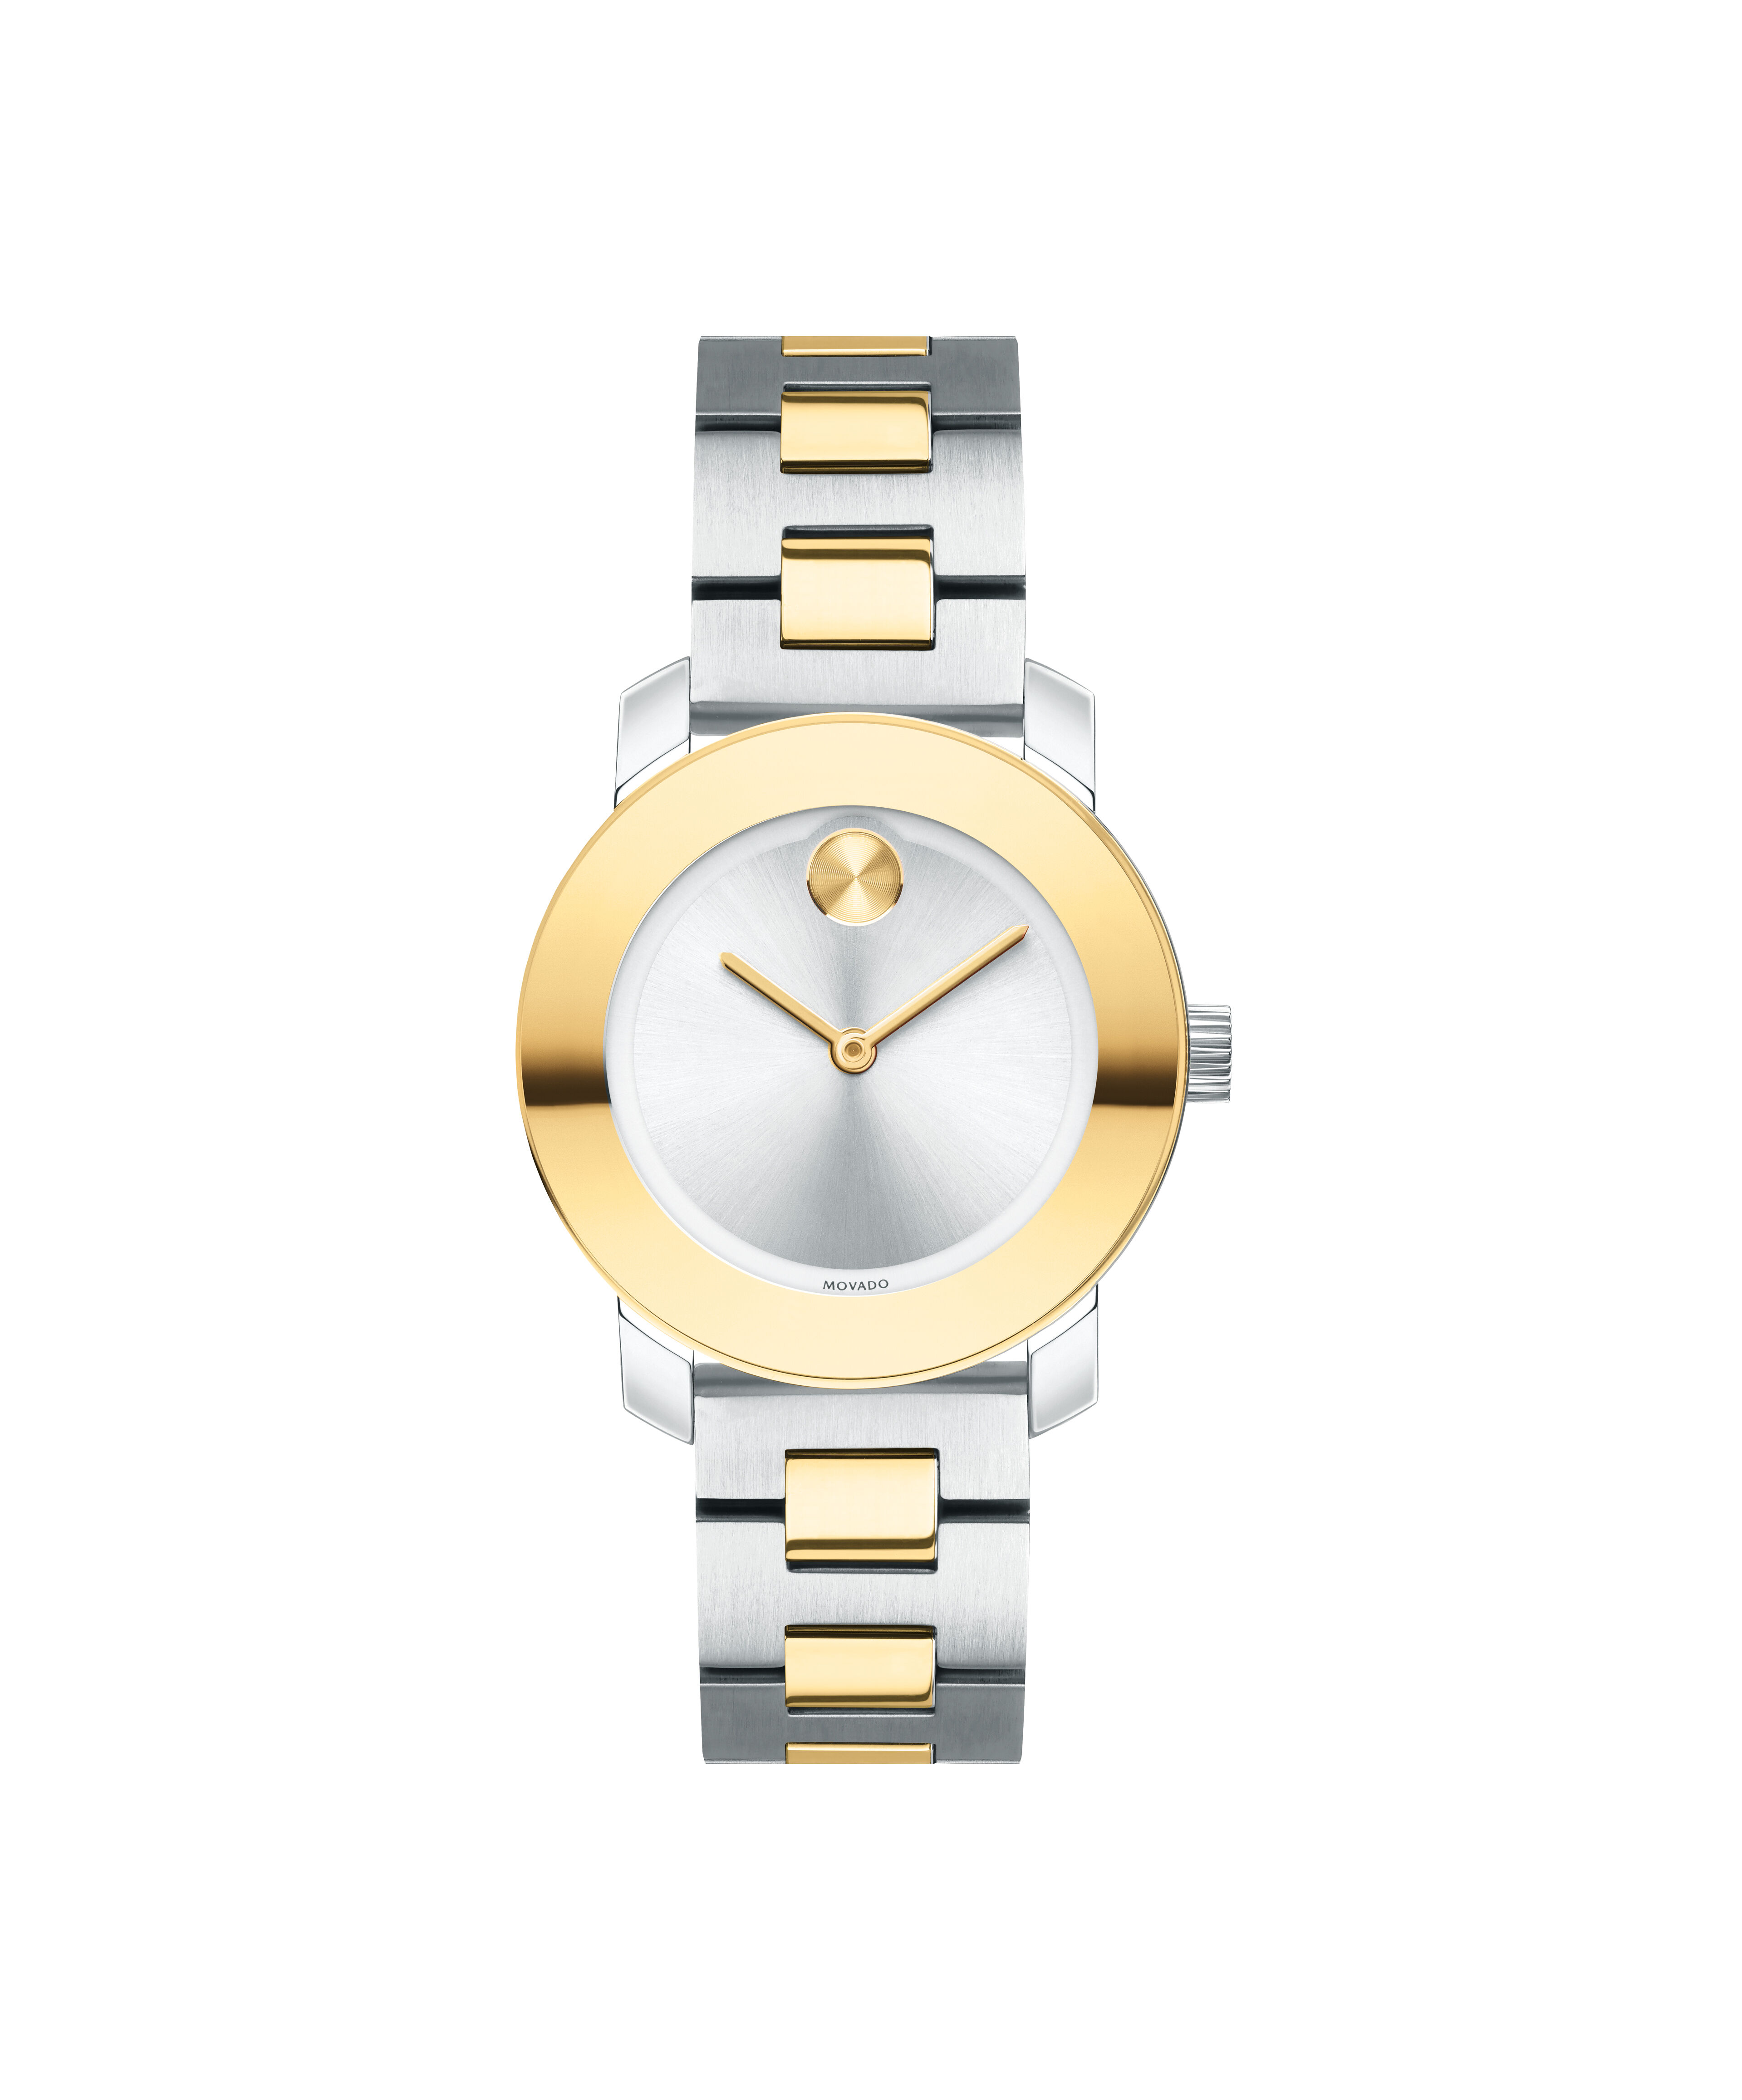 Replica Tiffany Watches